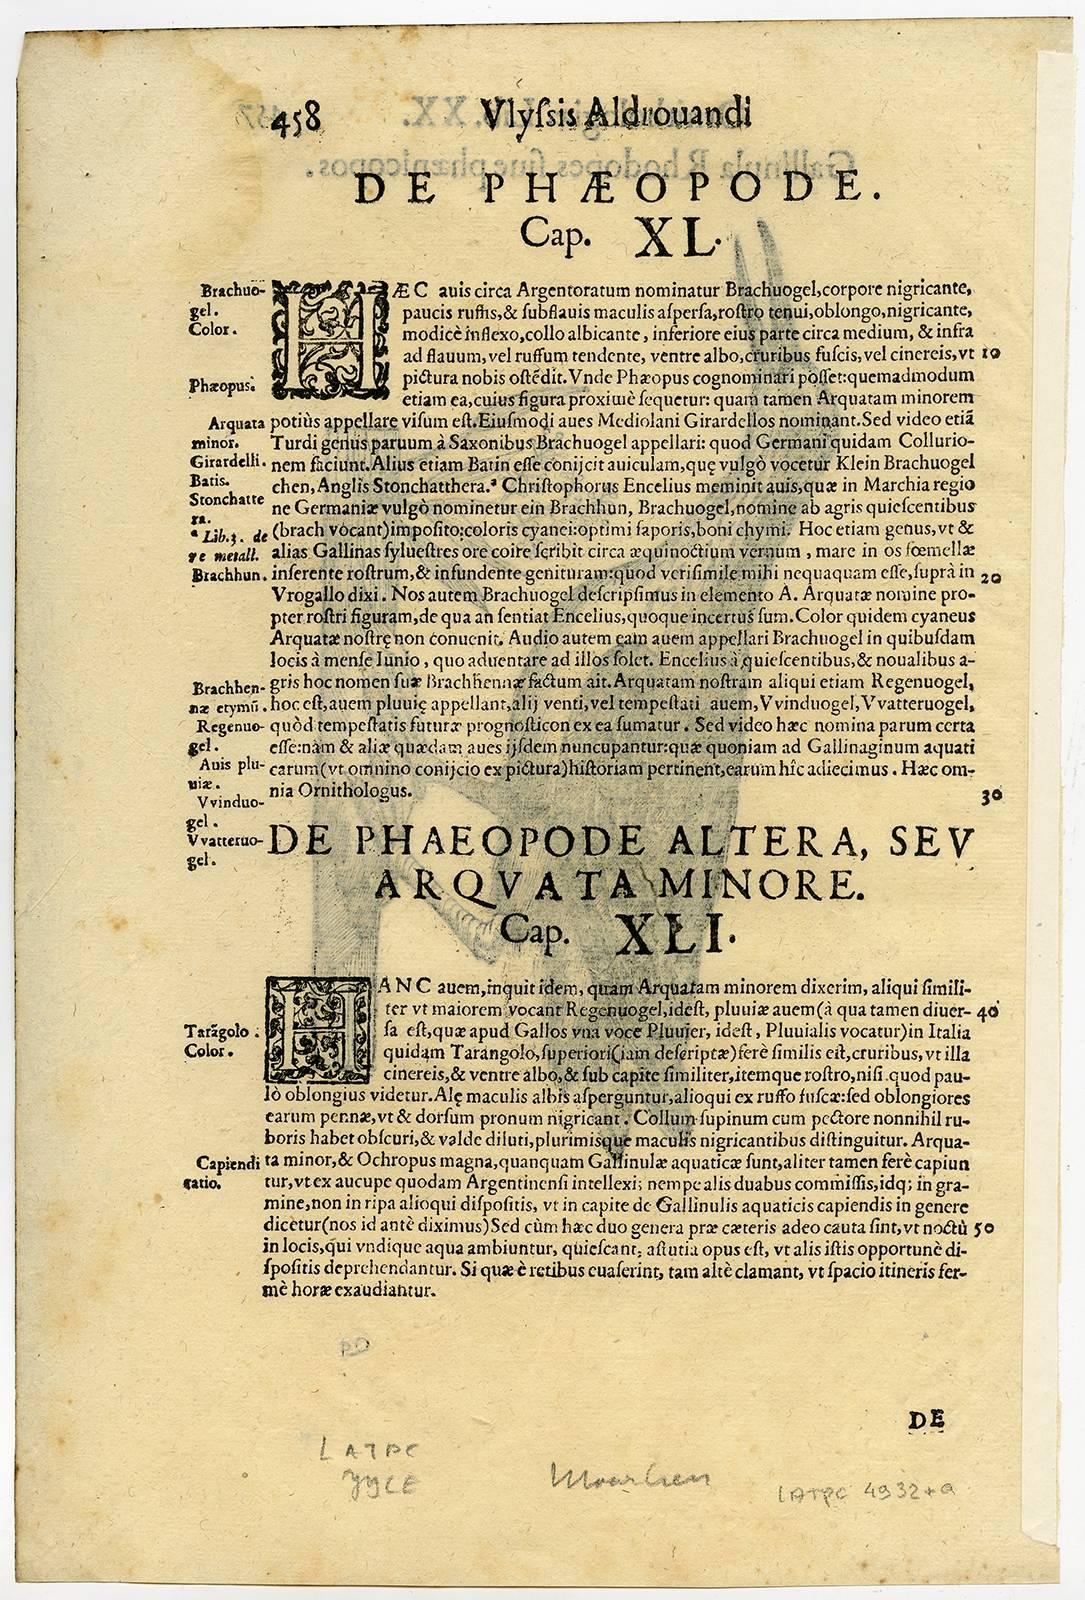 Gallinula Rhodopes sive phaenicopos. - Print by Cristoforo Coriolano